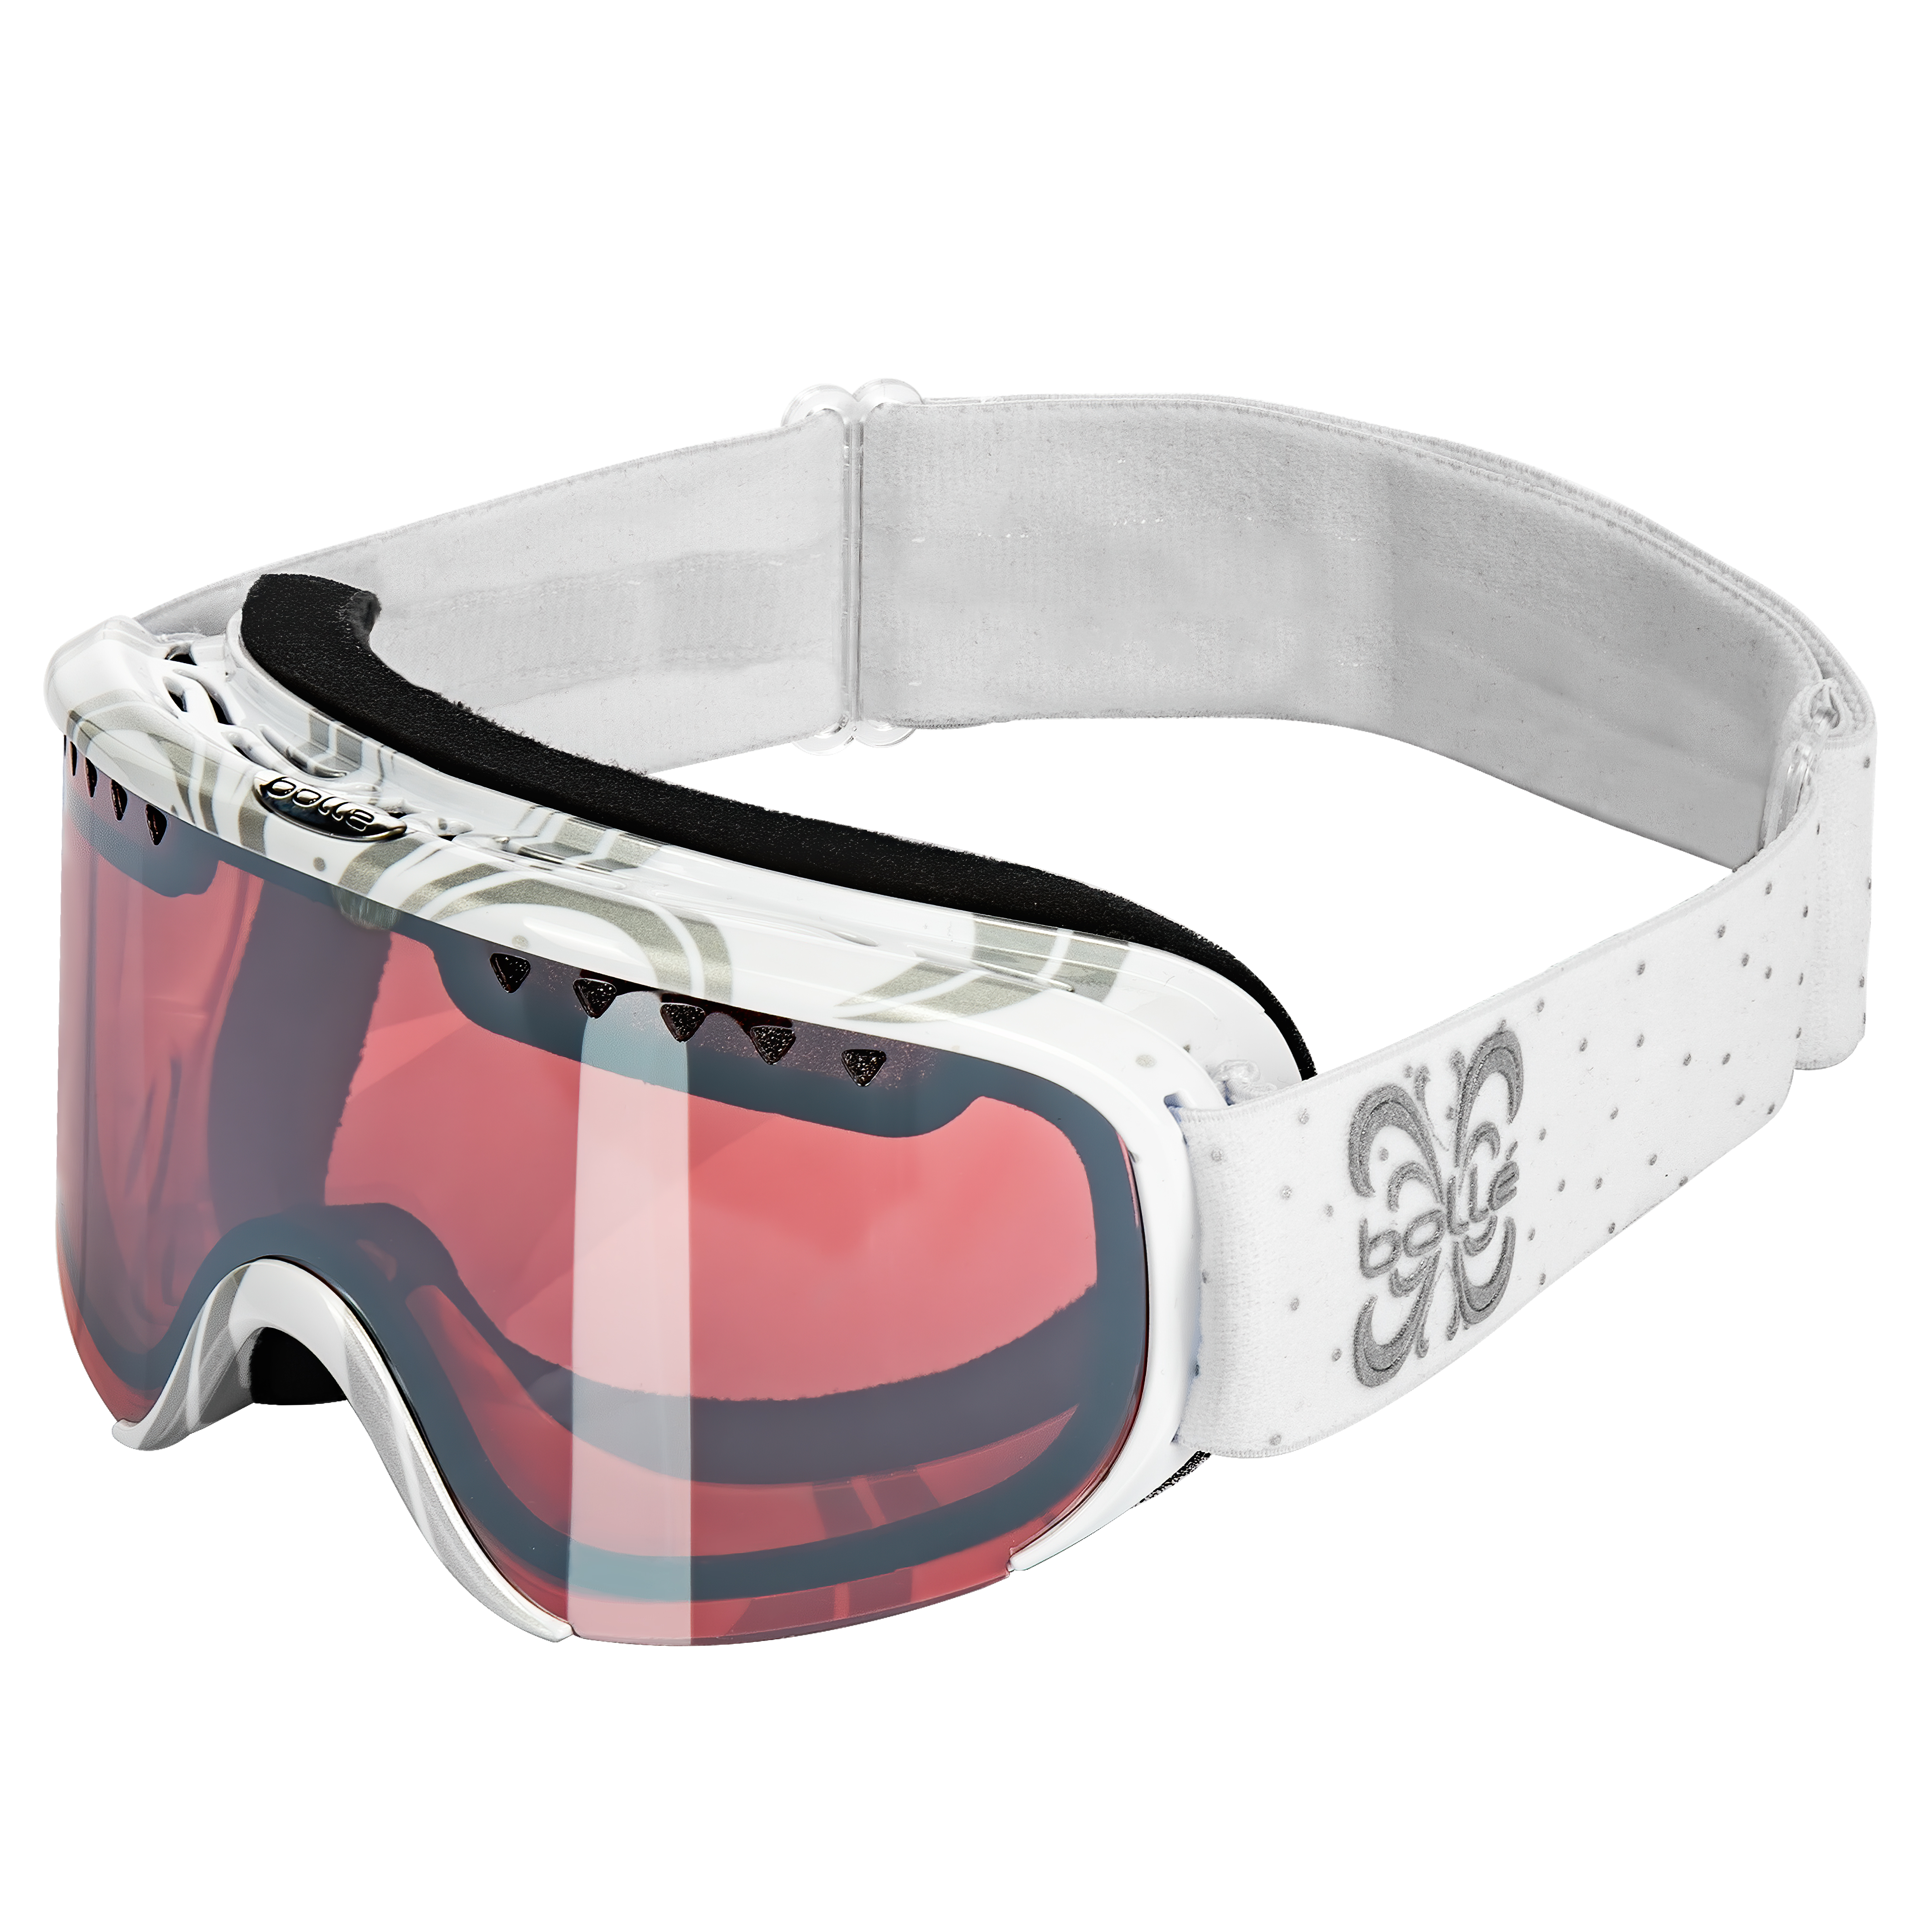 Цена лыжная маска с защитой от царапин Bolle Scarlett Shiny White Night Vermillon Gun в Киеве